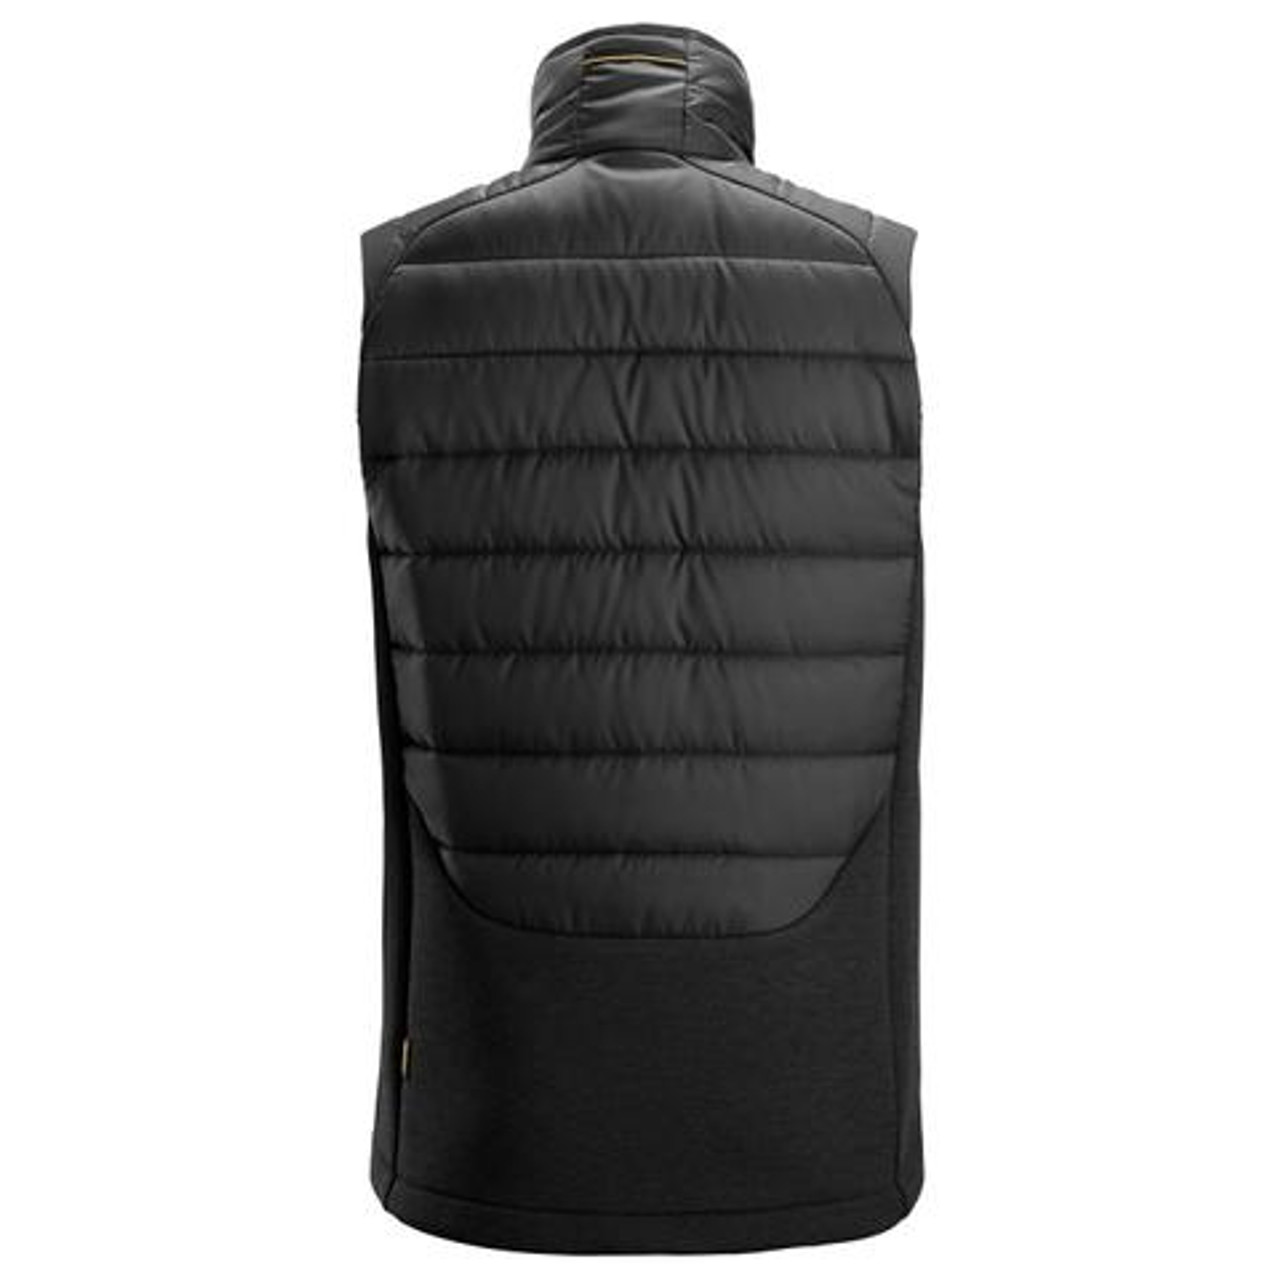 Hiking Vest  4902 - Black  Full Zip  Waterproof & Breathable for Outdoor Adventures.